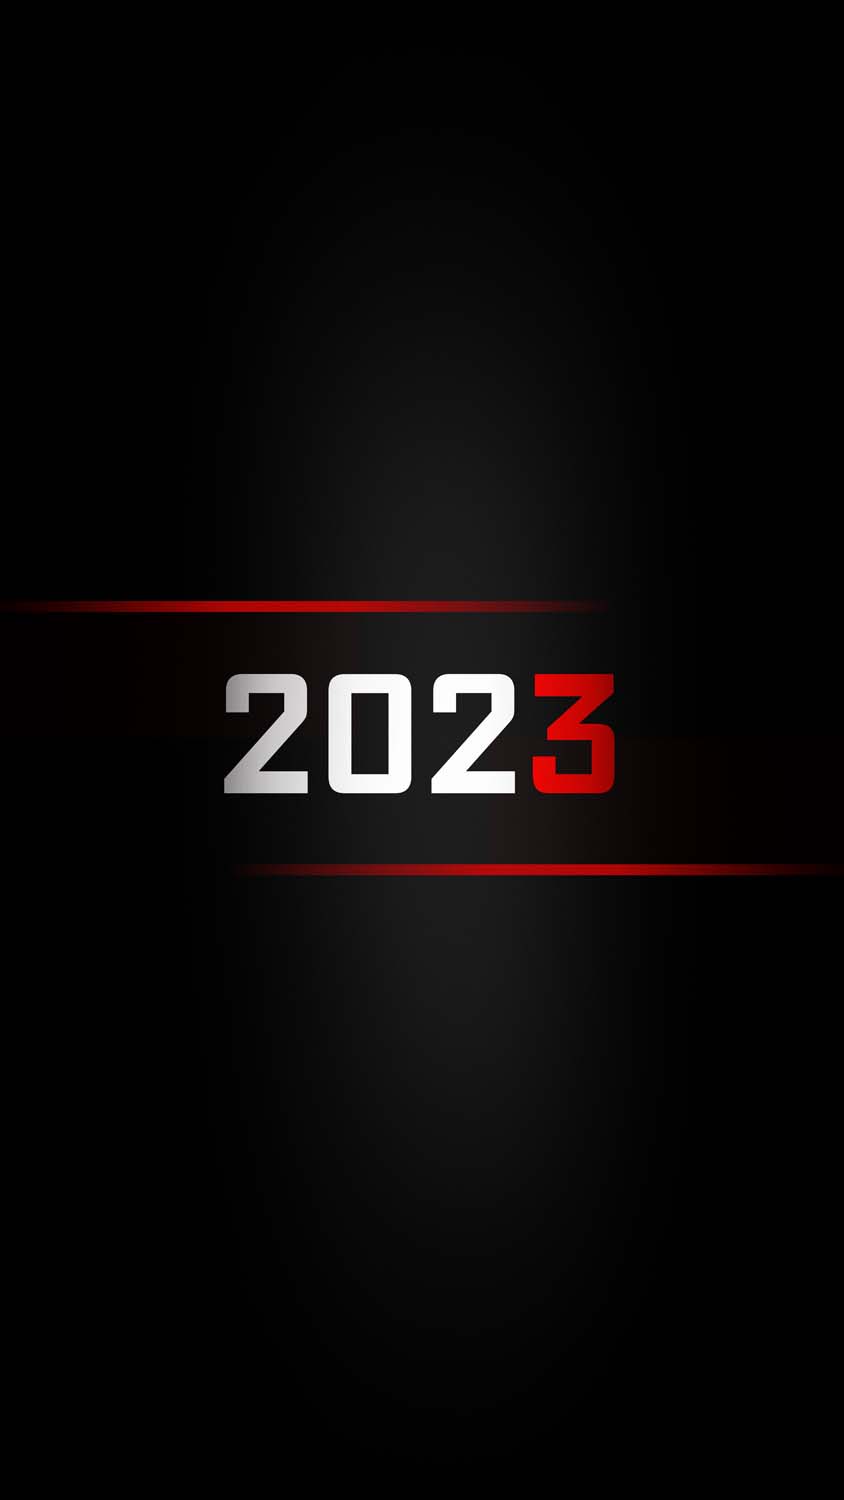 2023 iPhone Wallpaper HD